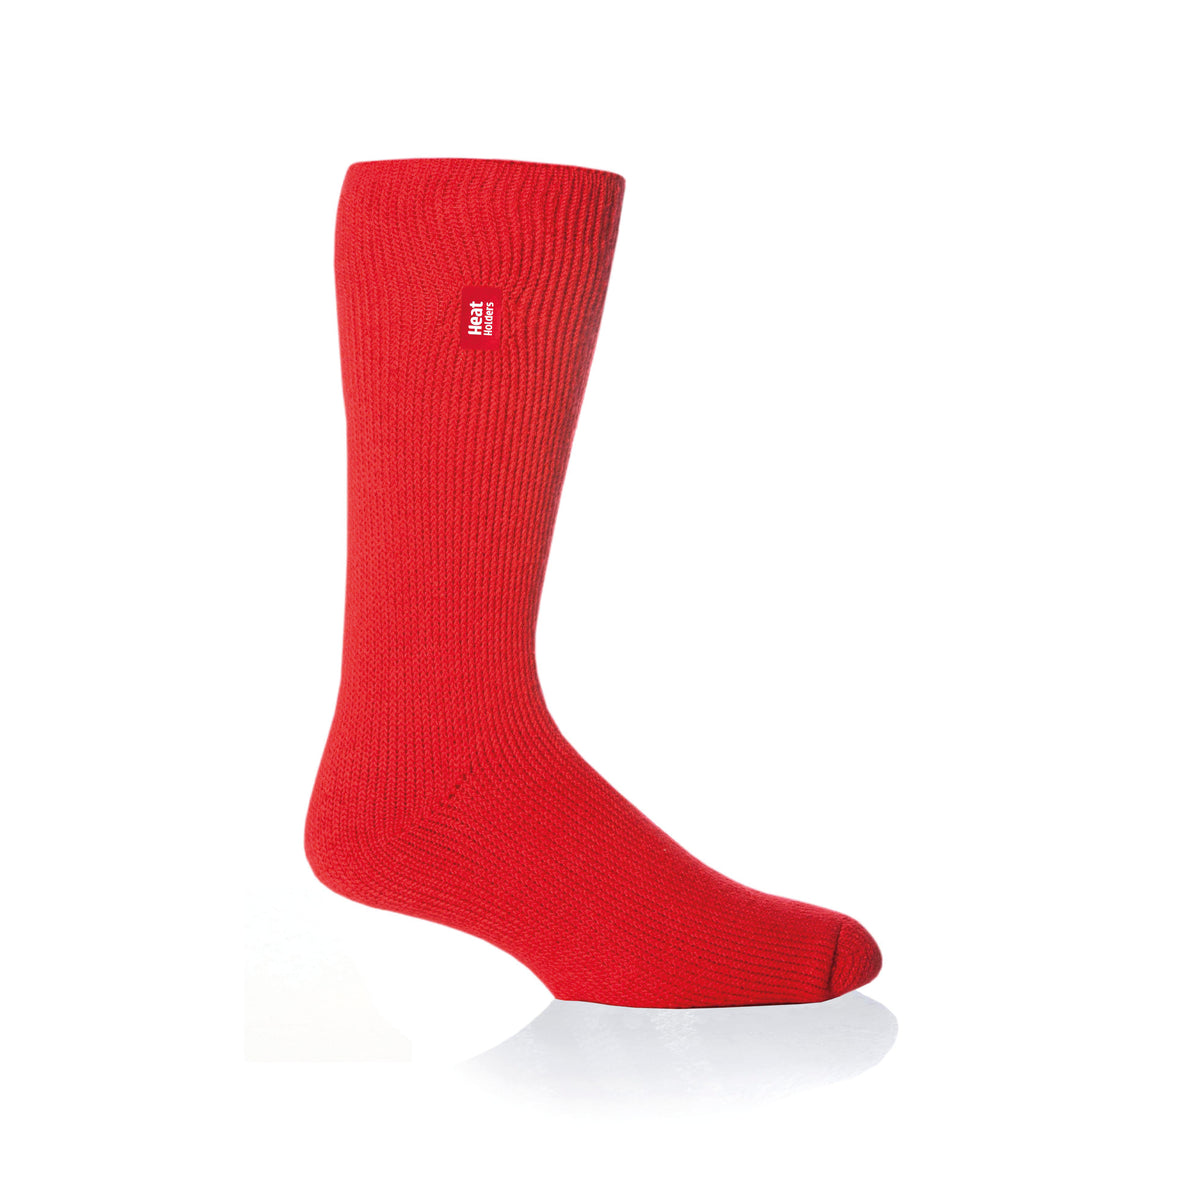 Heat Holders Thermal Socks Men's Original Red 